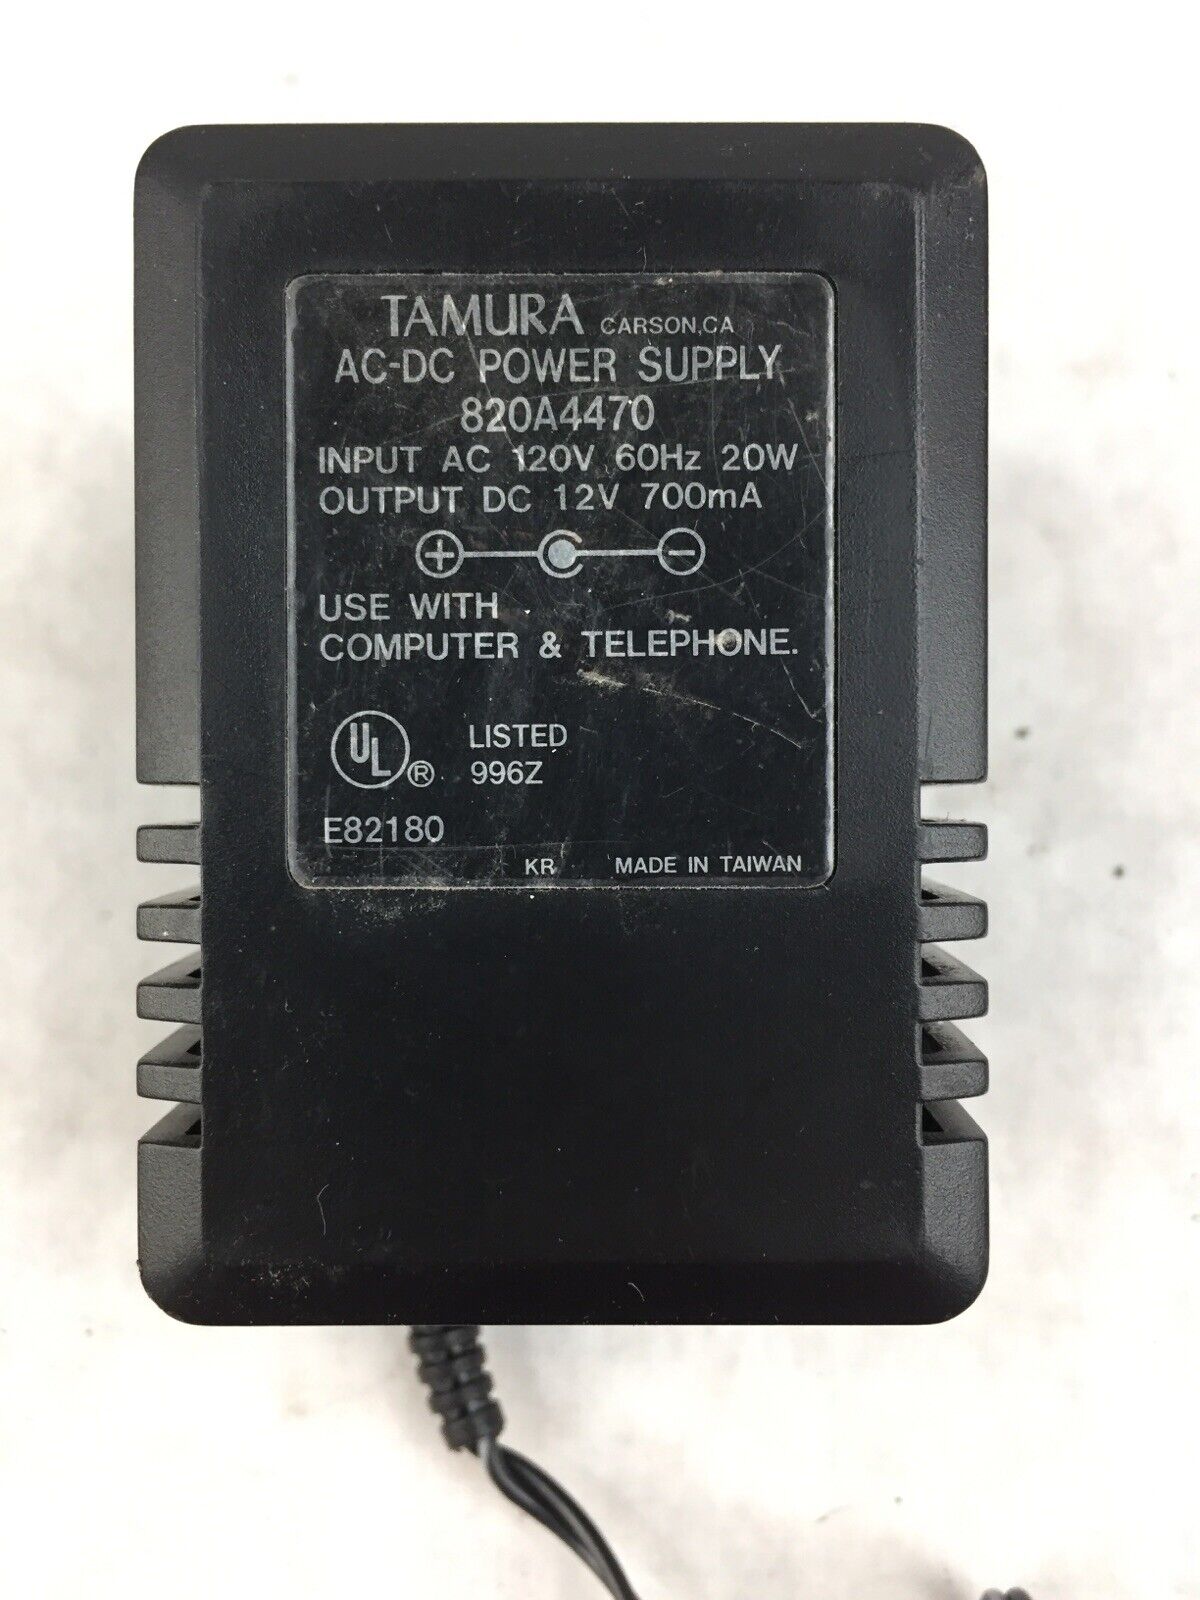 Tamura Class 2 Transformer 820A4470 IN 120V 60Hz 20W OUT 12V 700mA